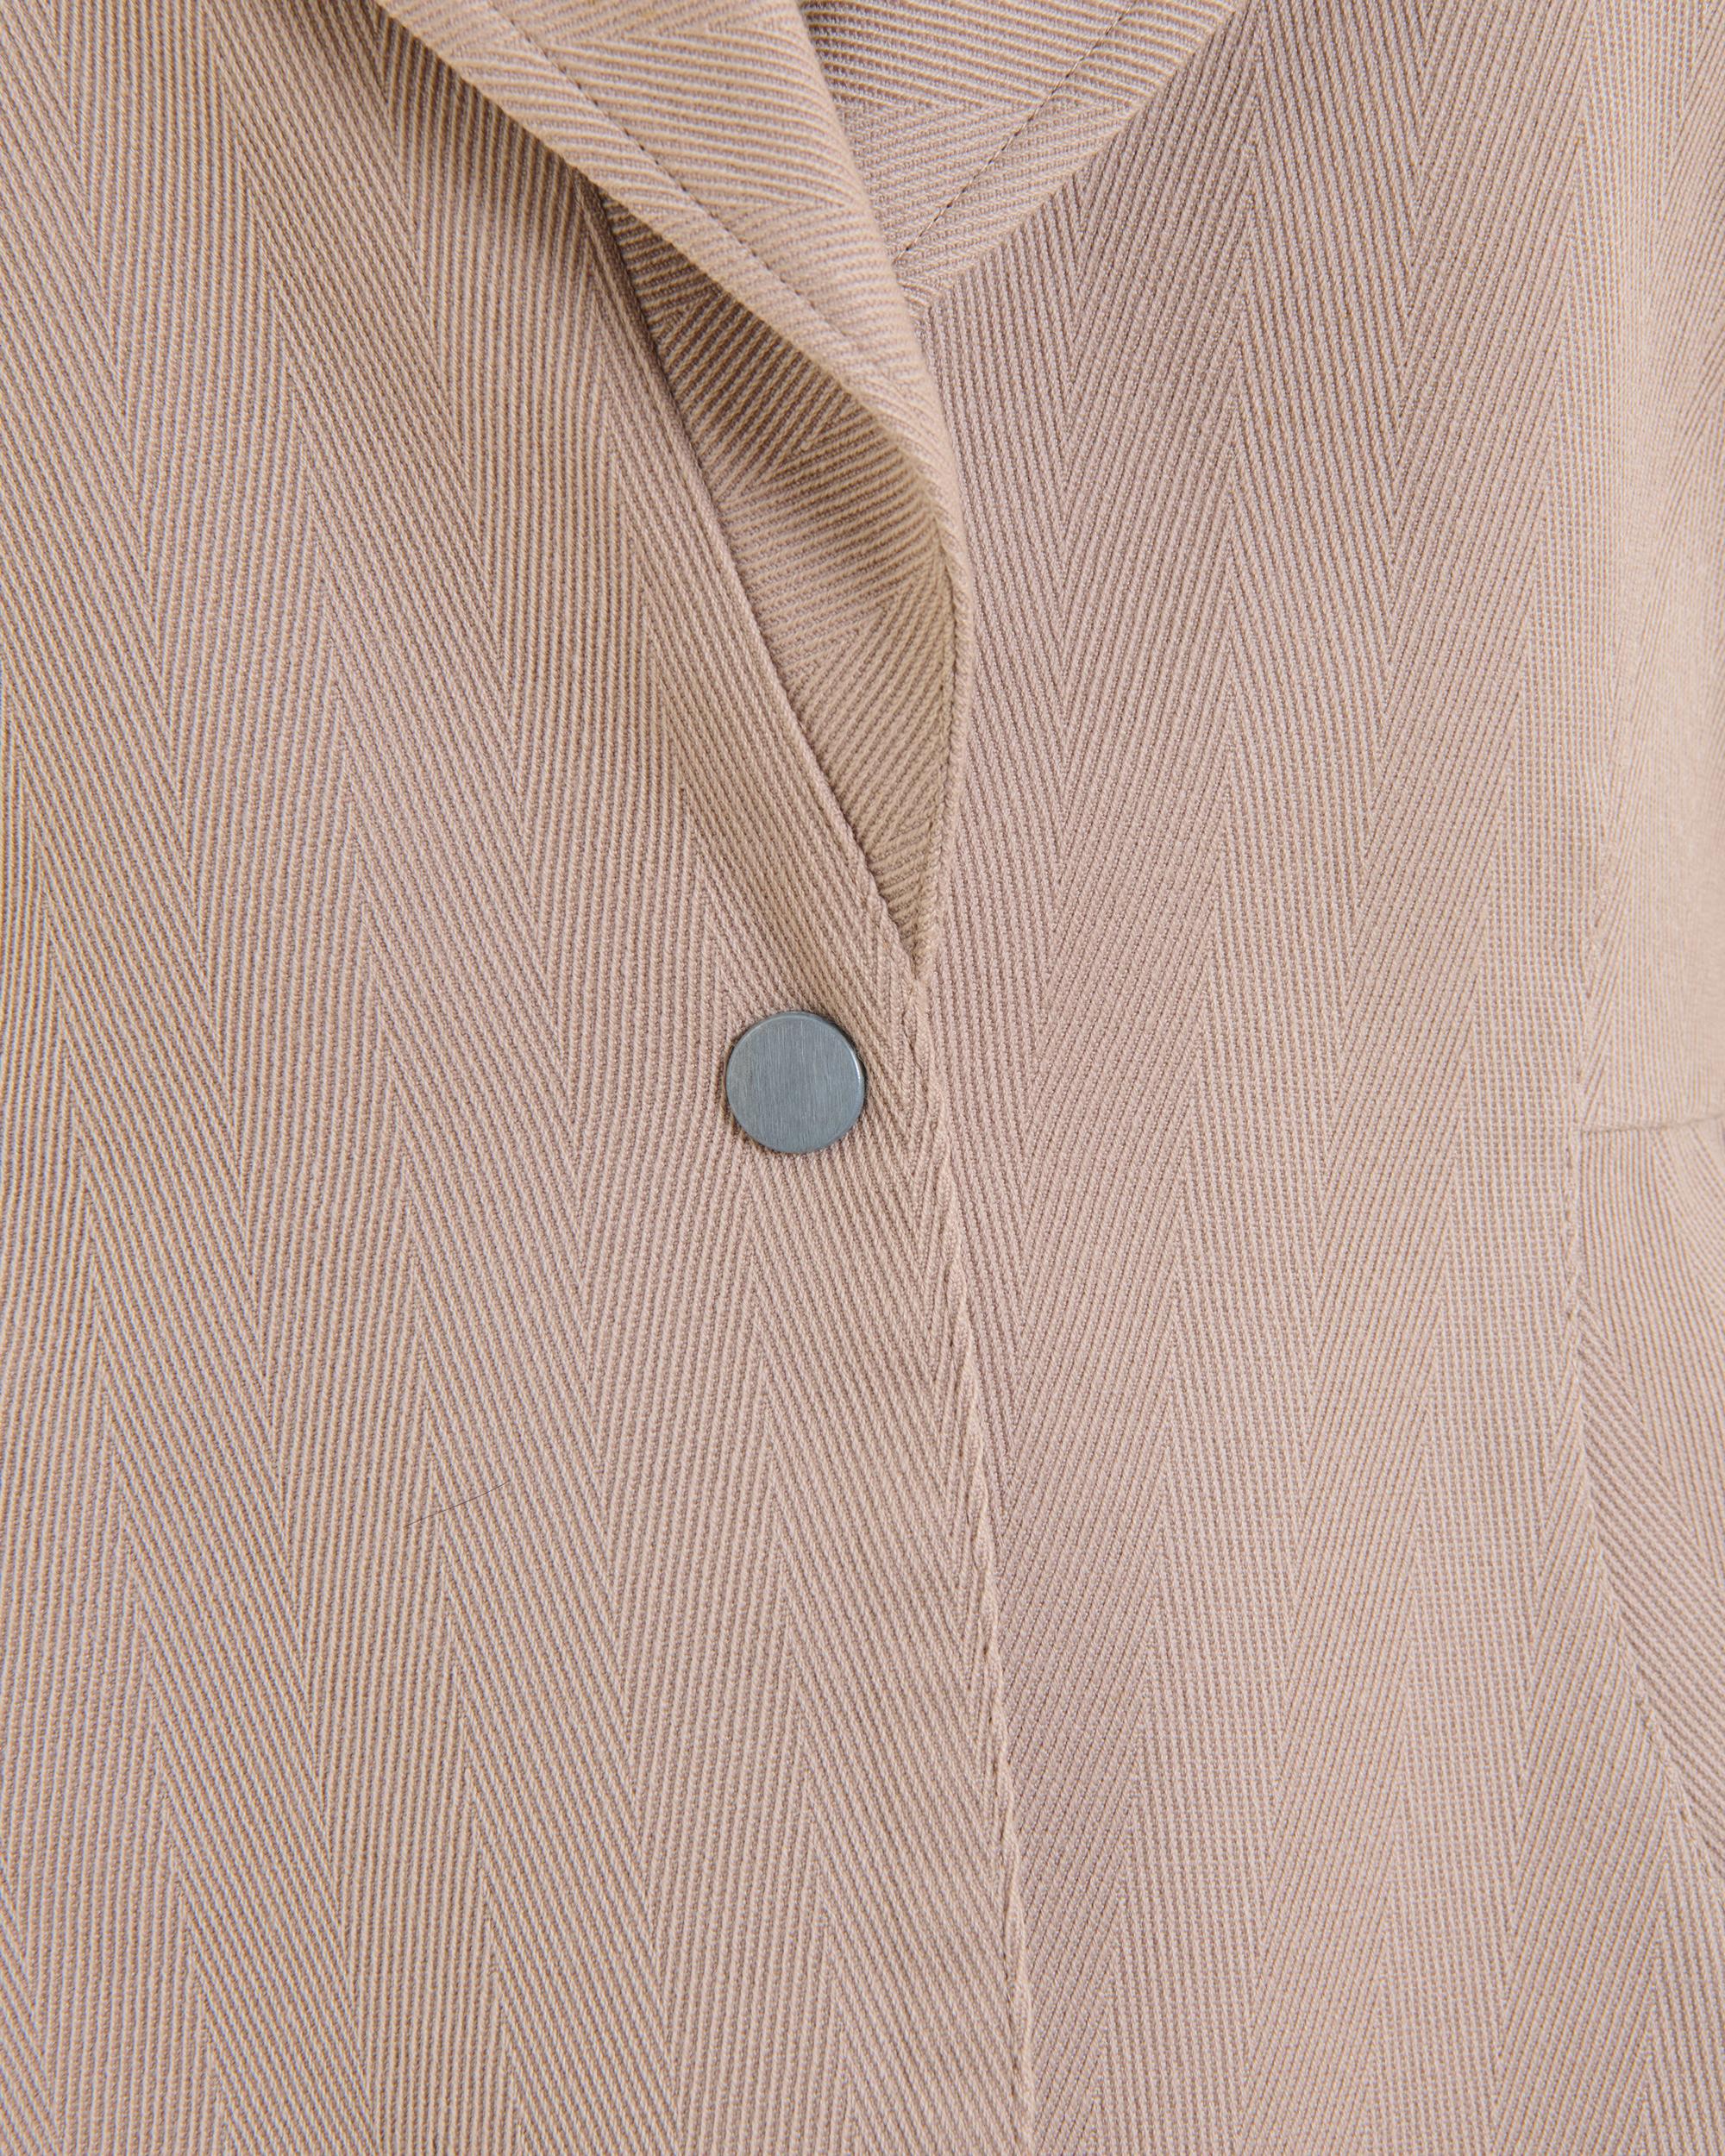 Thierry Mugler S/S 1989 'Les Atlantes' Beige shaped sculptural blazer jacket For Sale 4